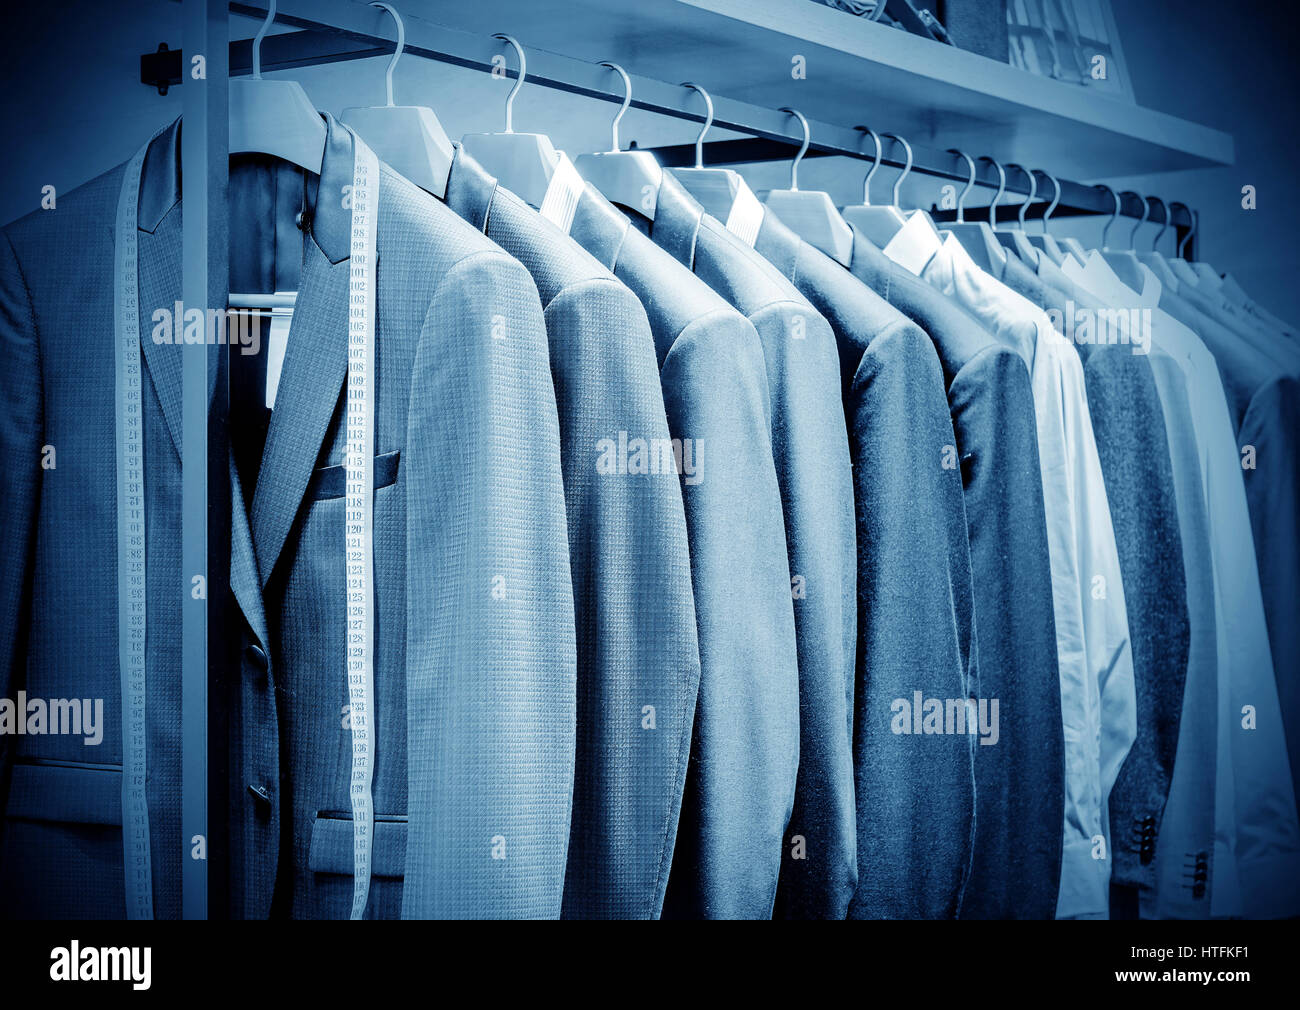 Row of men's suits hanging in closet. Stock Photo